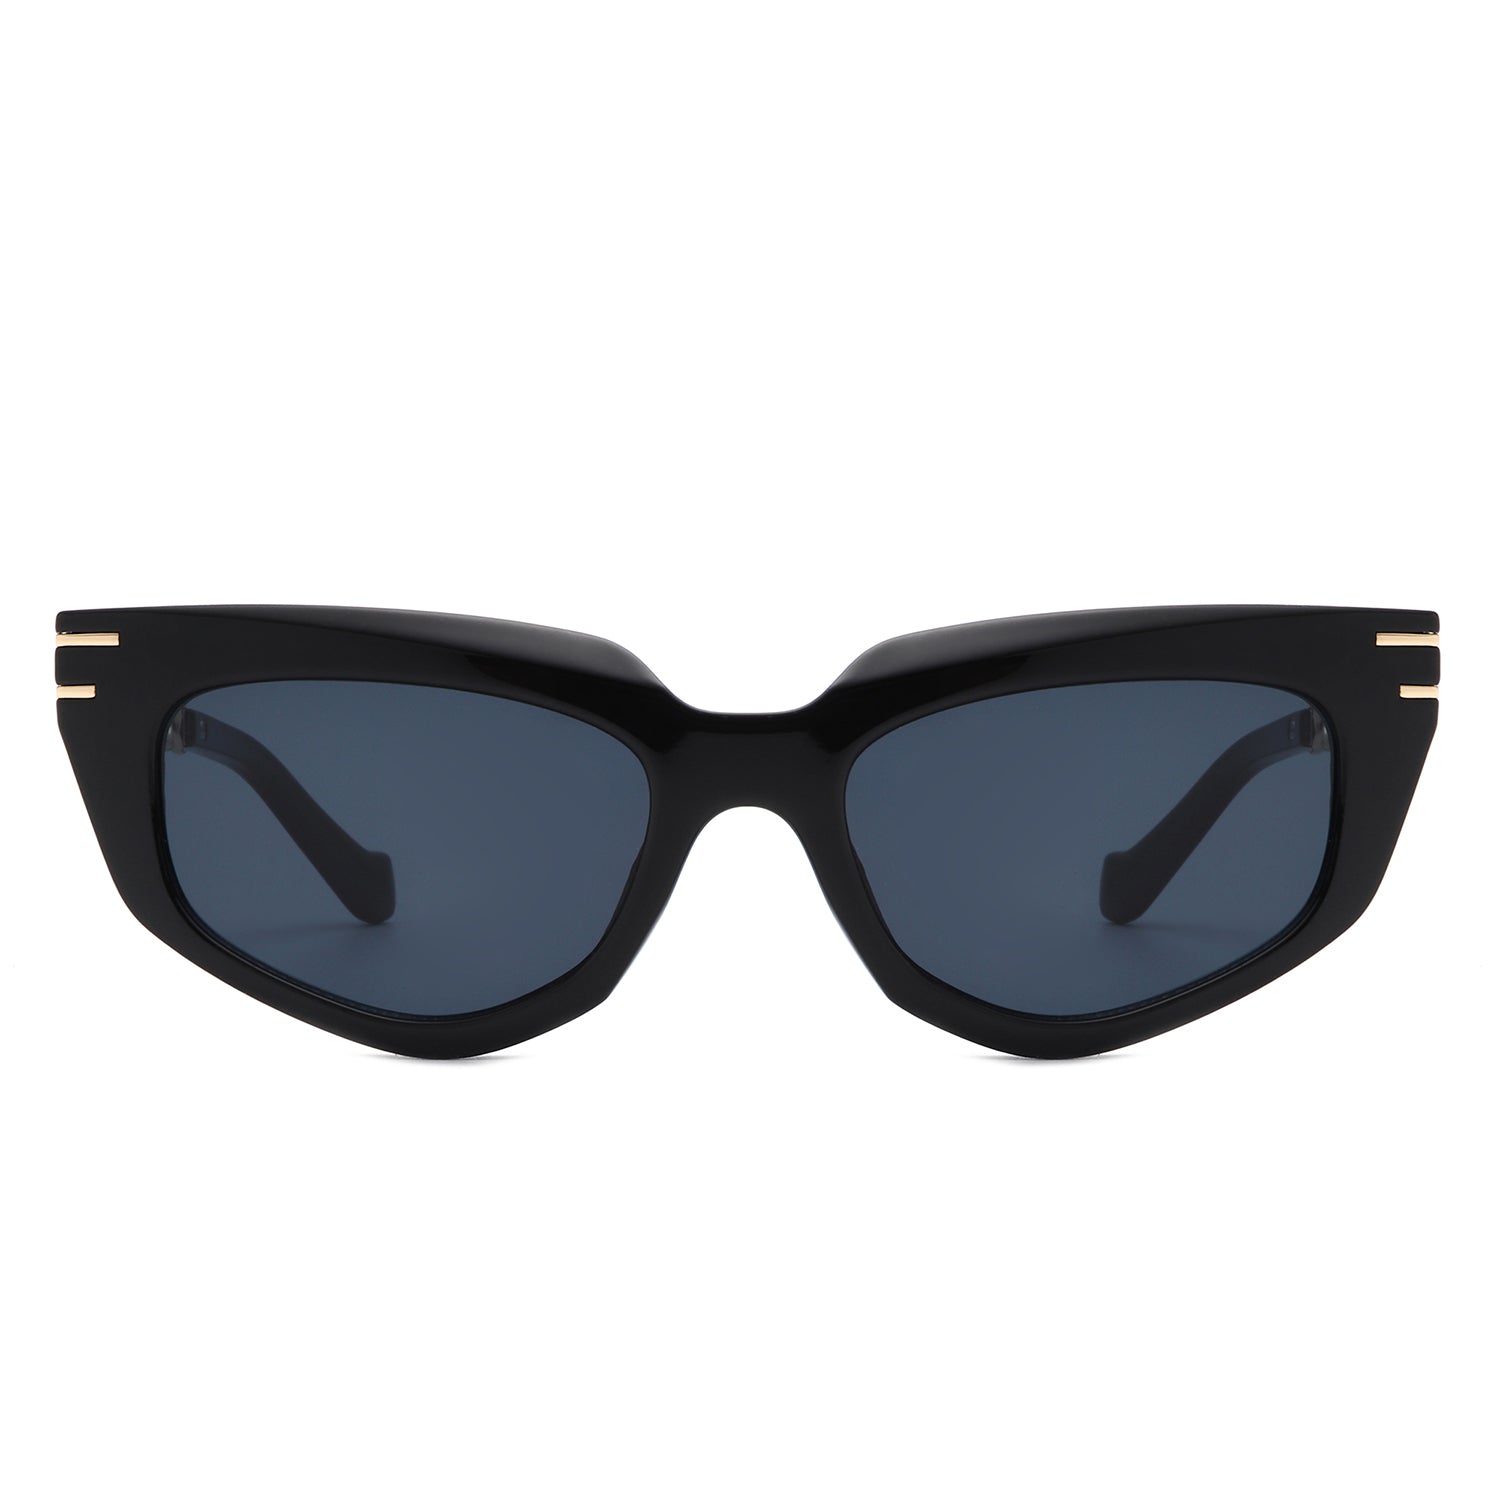 HS2140 - Women Chic Chain Link Design Fashion Cat Eye Wholesale Sunglasses